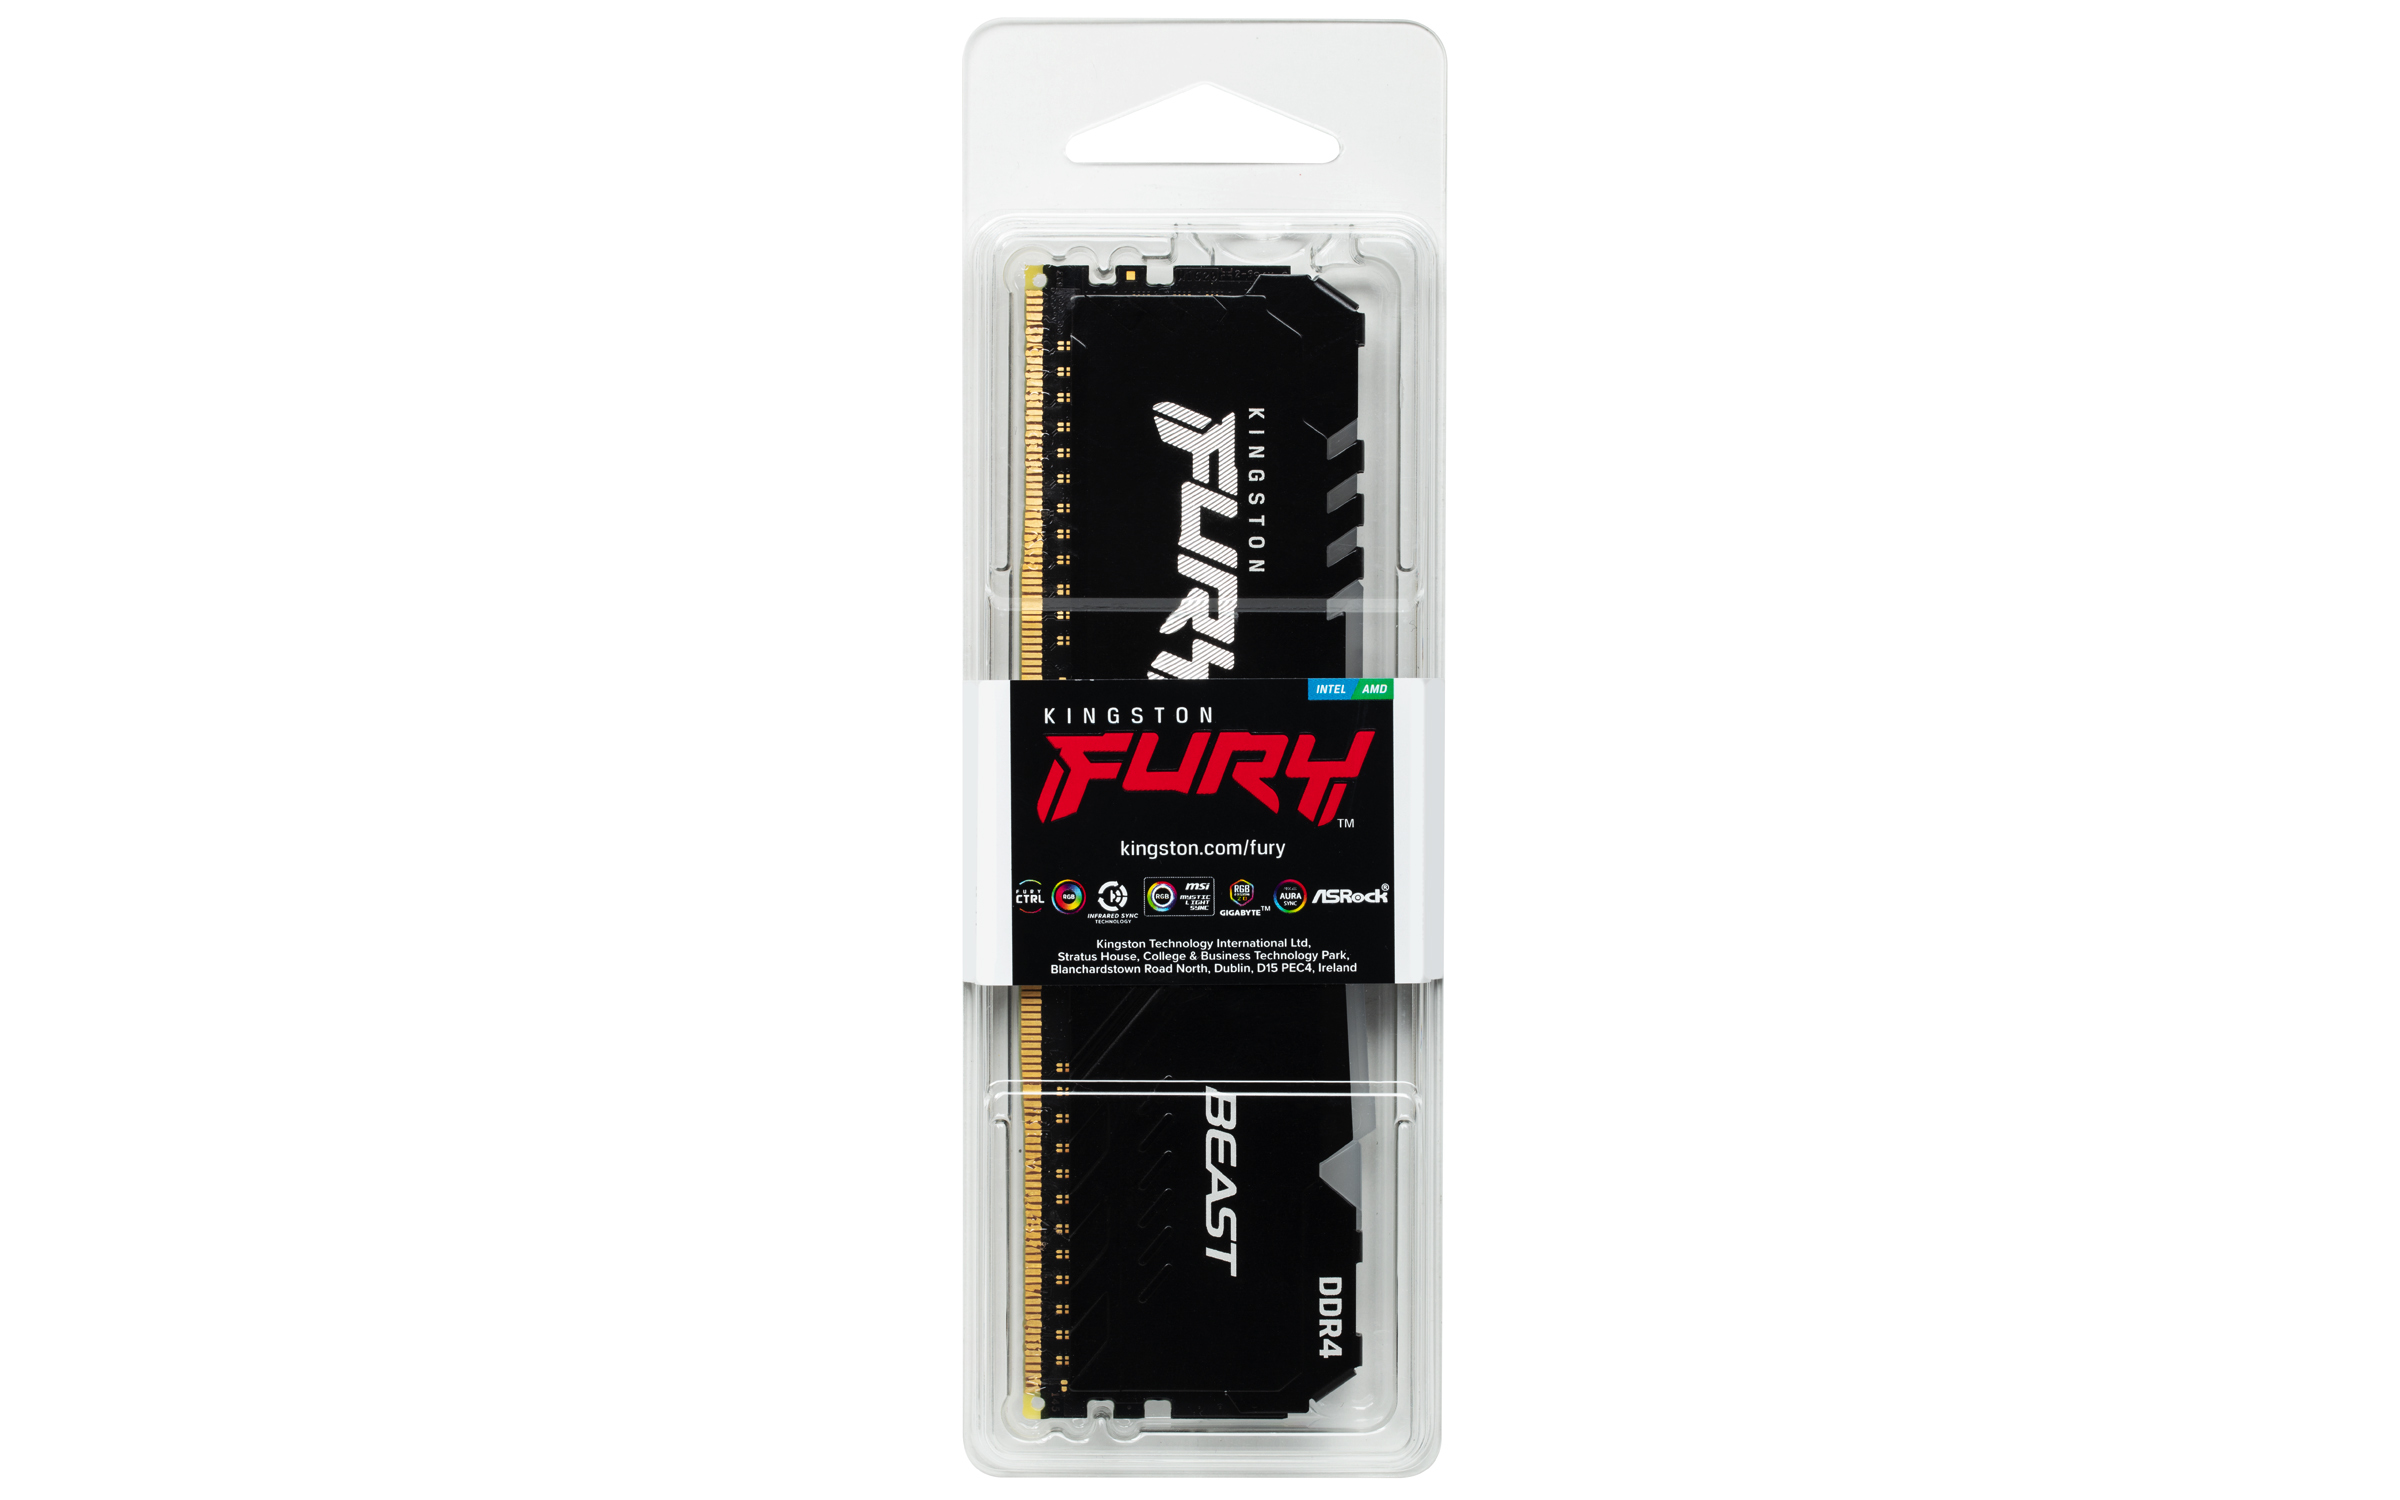 Kingston Fury Beast RGB memoria 8 GB 1 x 8 DDR4 3200 MHz 8GB DDR4-3200Mhz CL16 DIMM - 8 GB - DDR4